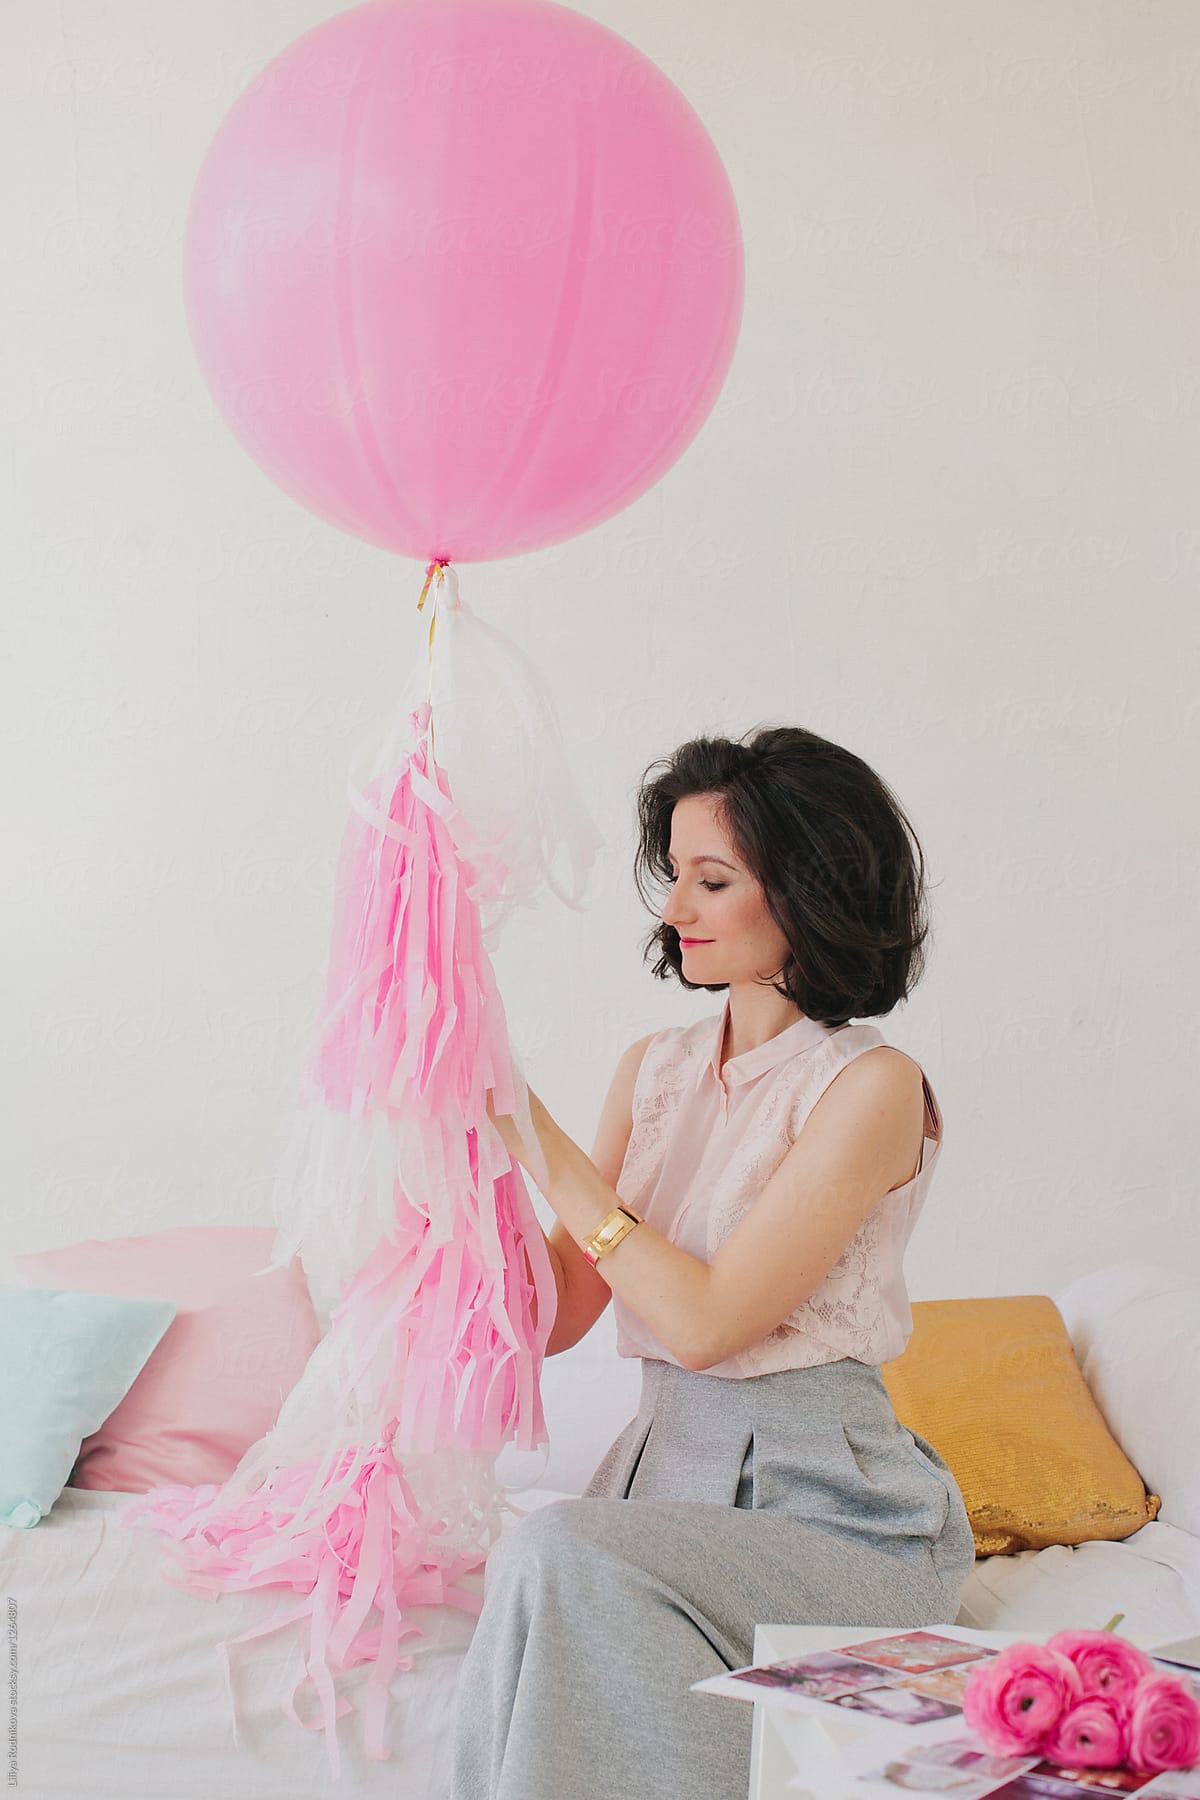 Young Beautiful Woman With Pink Balloon Del Colaborador De Stocksy Liliya Rodnikova Stocksy 